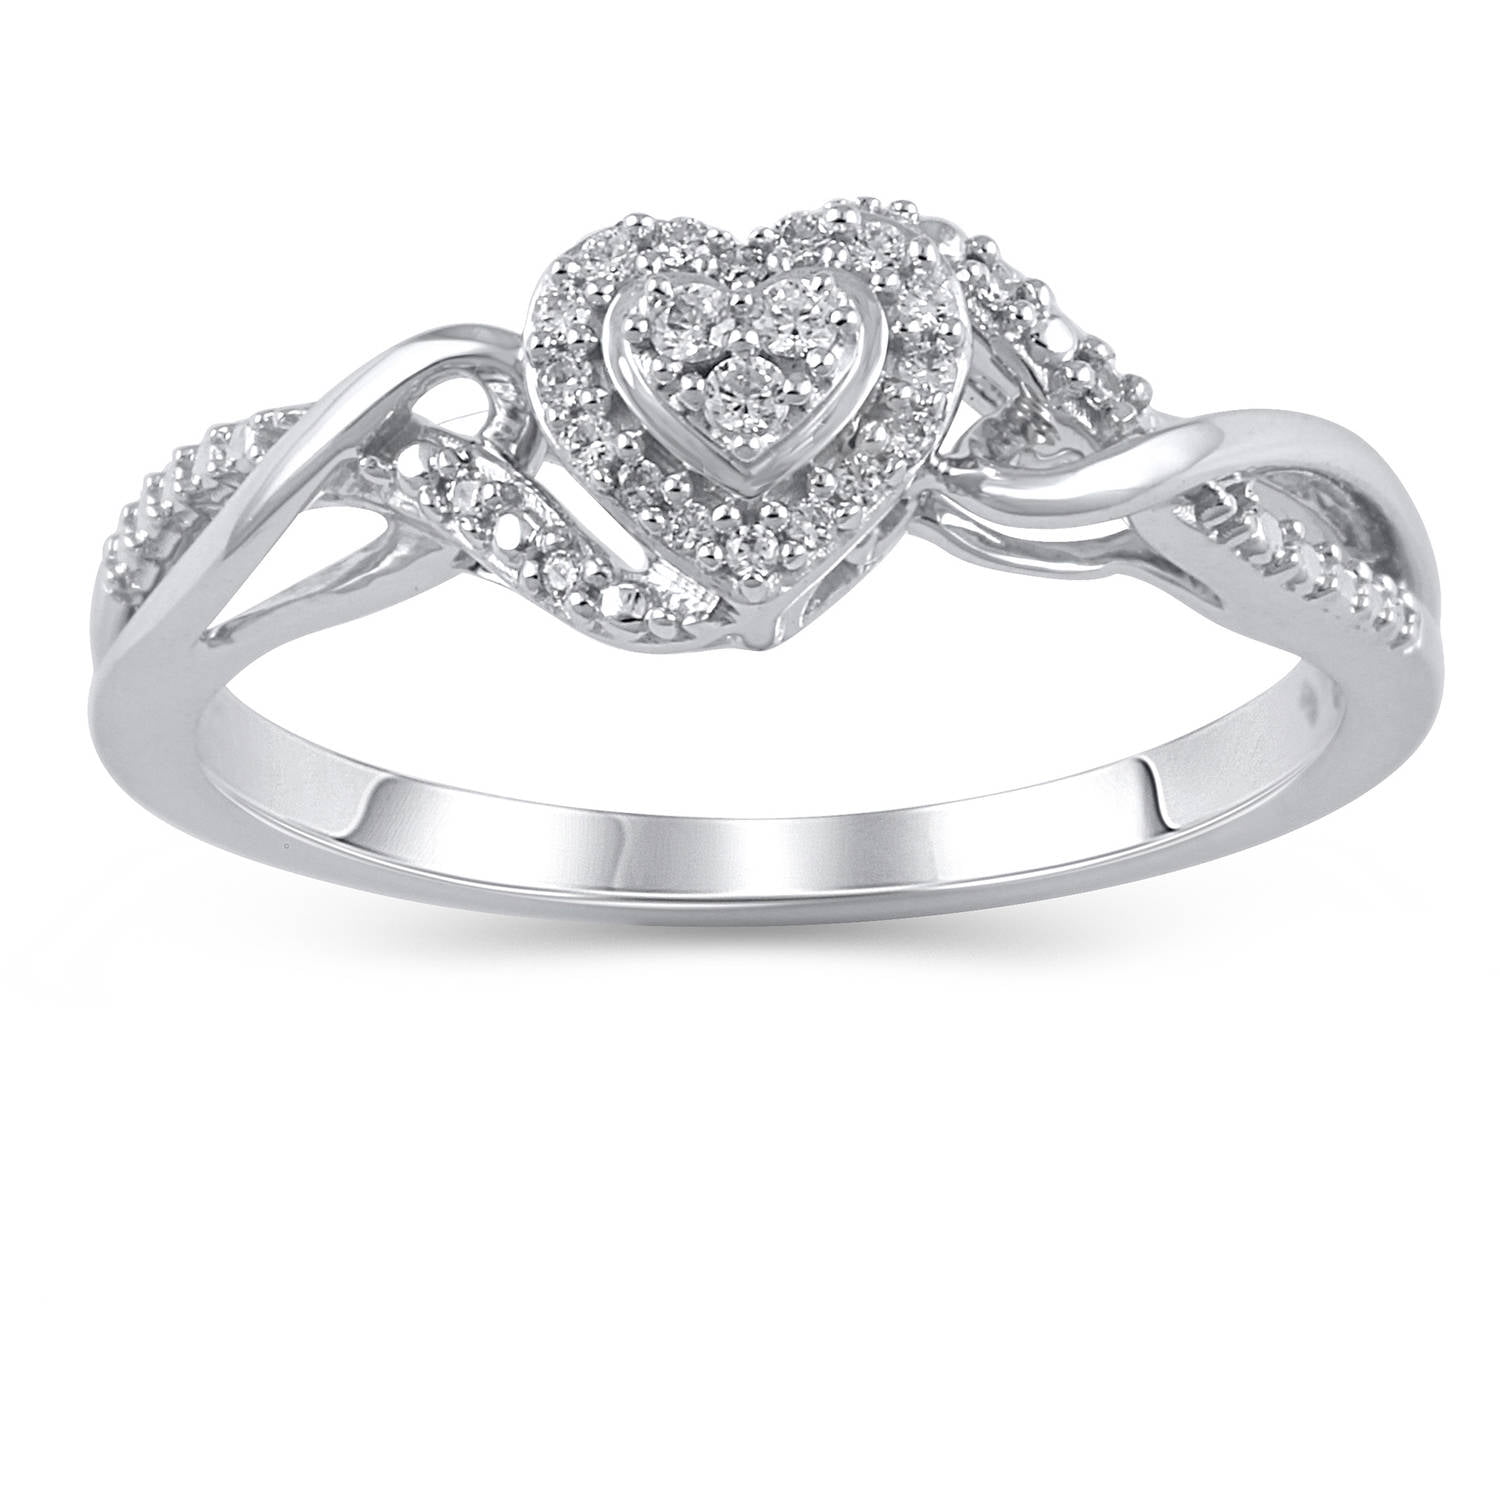 Valentine's Rings Fashion Rings Anniversary Rings, 925 Sterling Silver Rings Promise Rings Enchanted Disney Rings Engagement Rings